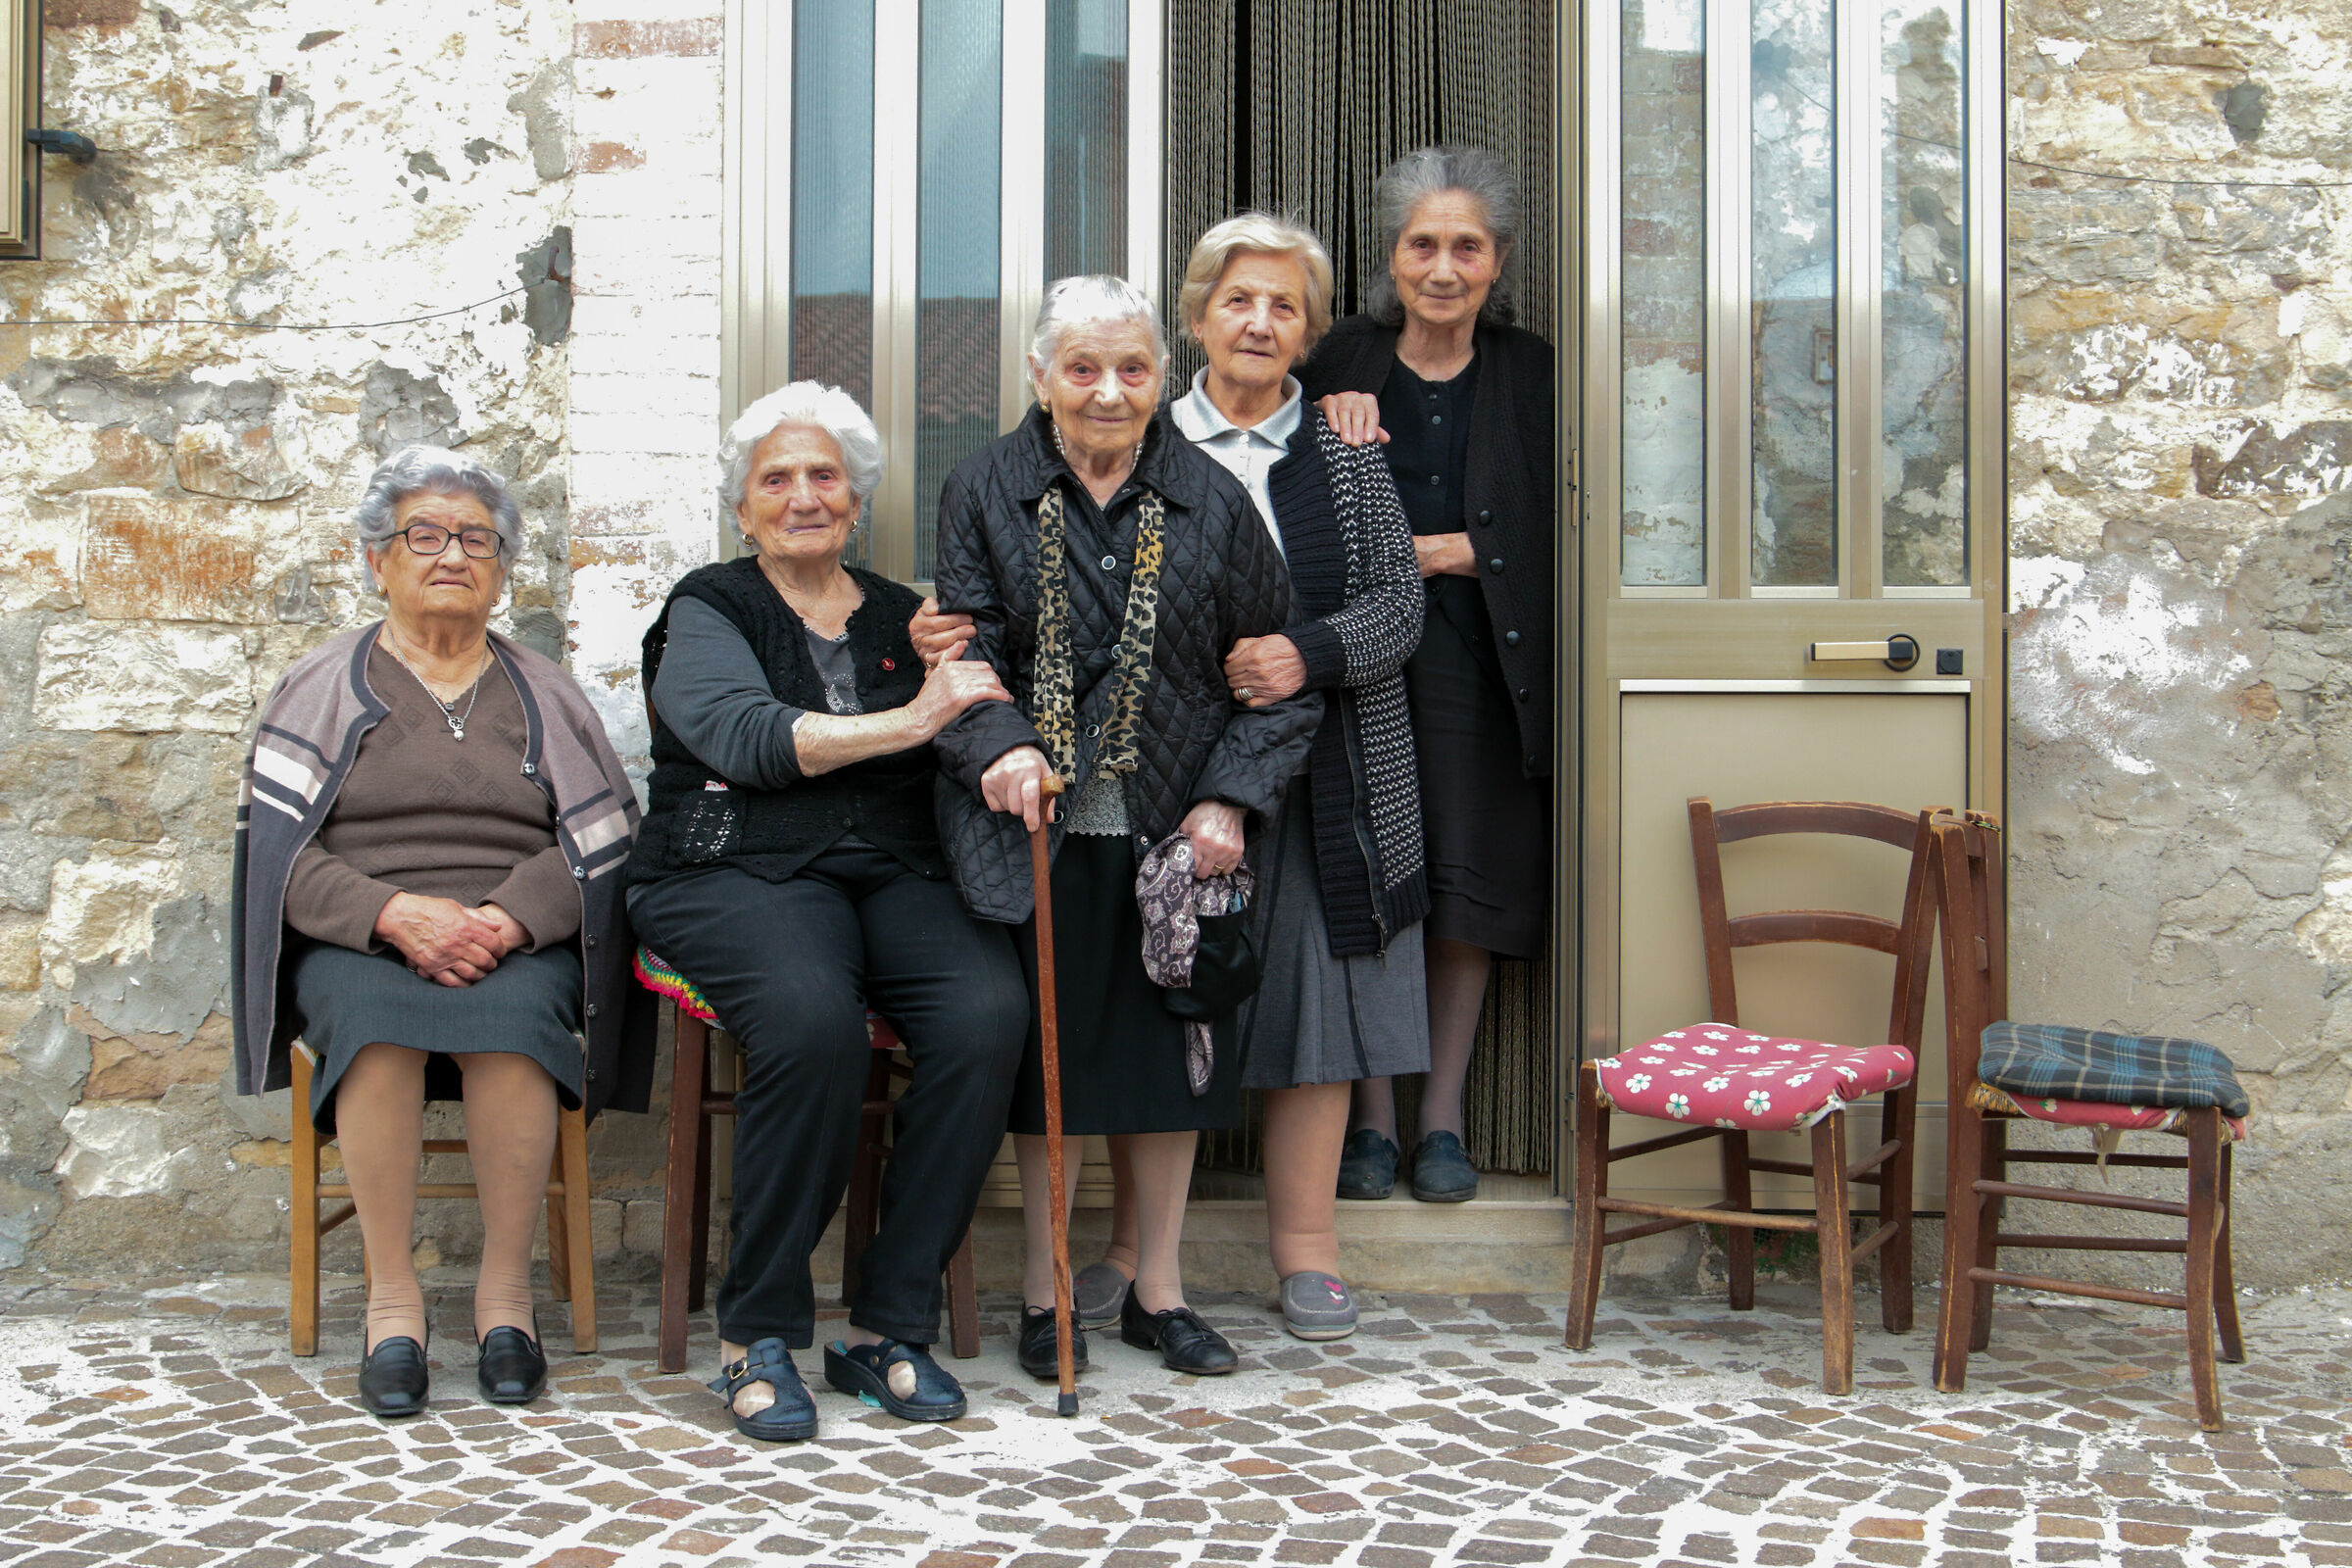 Elderly ladies...